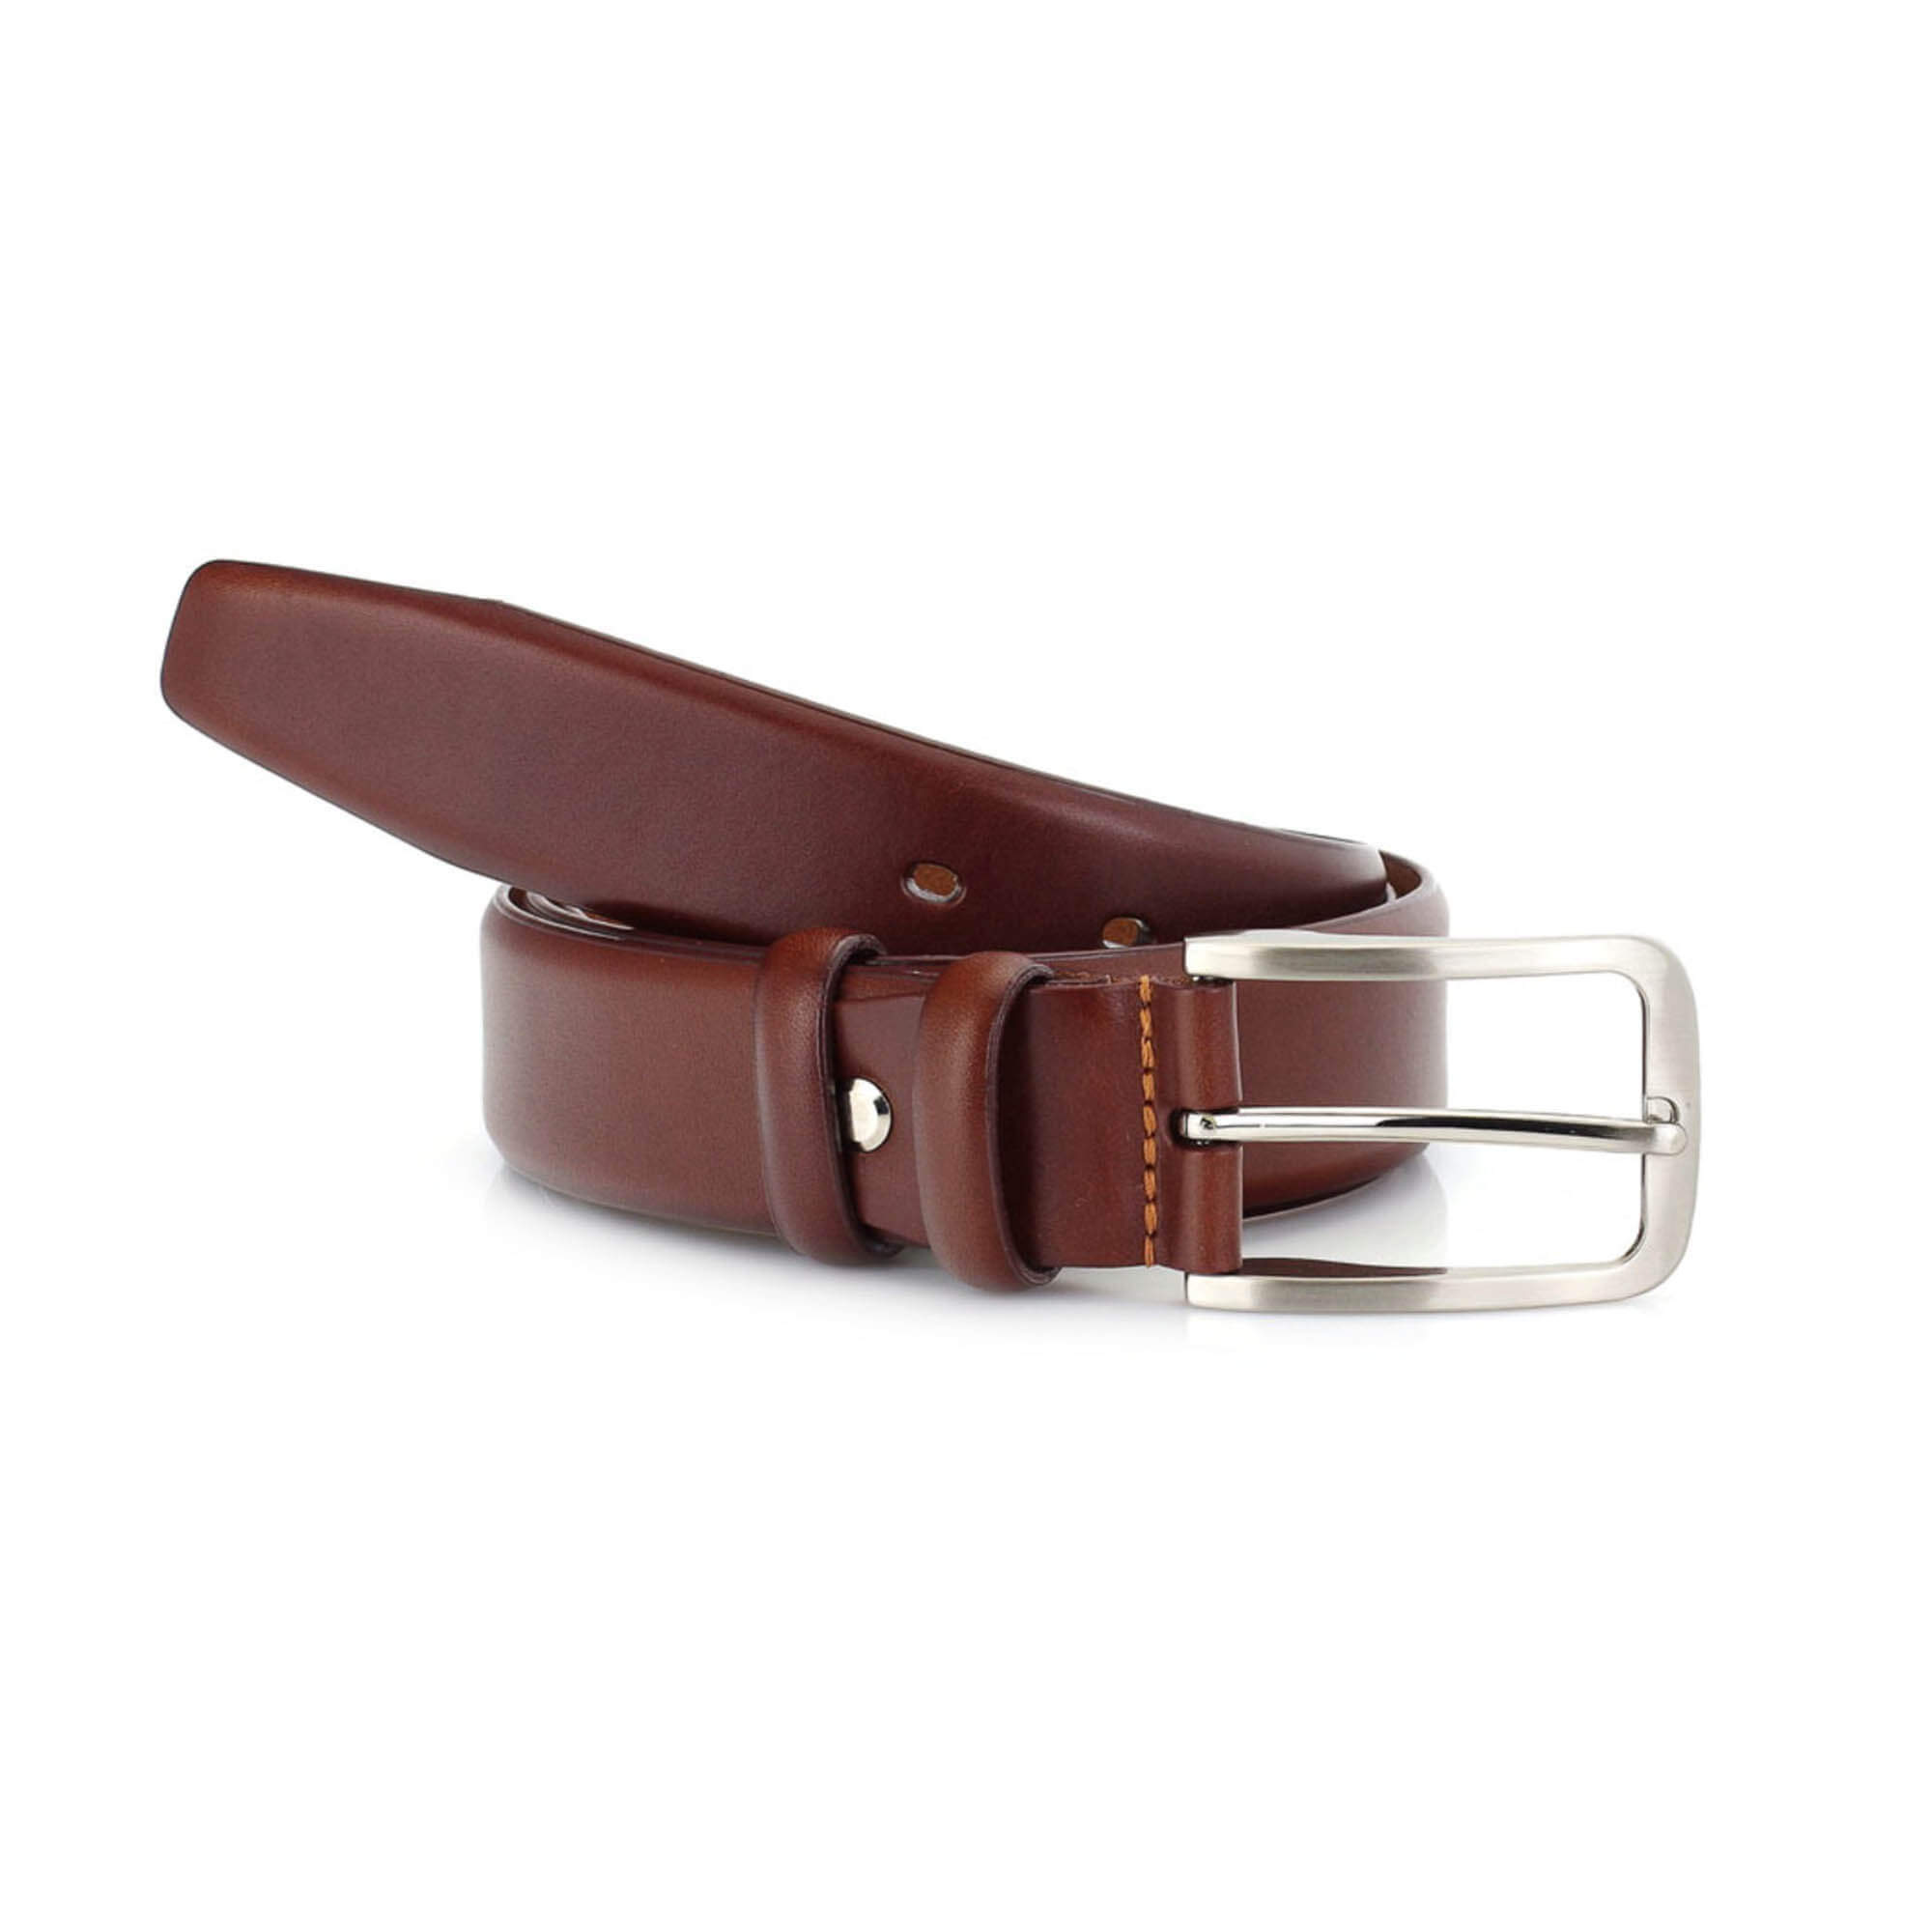 Buy Chestnut Leather Belt For Men Suit - Veg Tan Leather 3.5 Cm